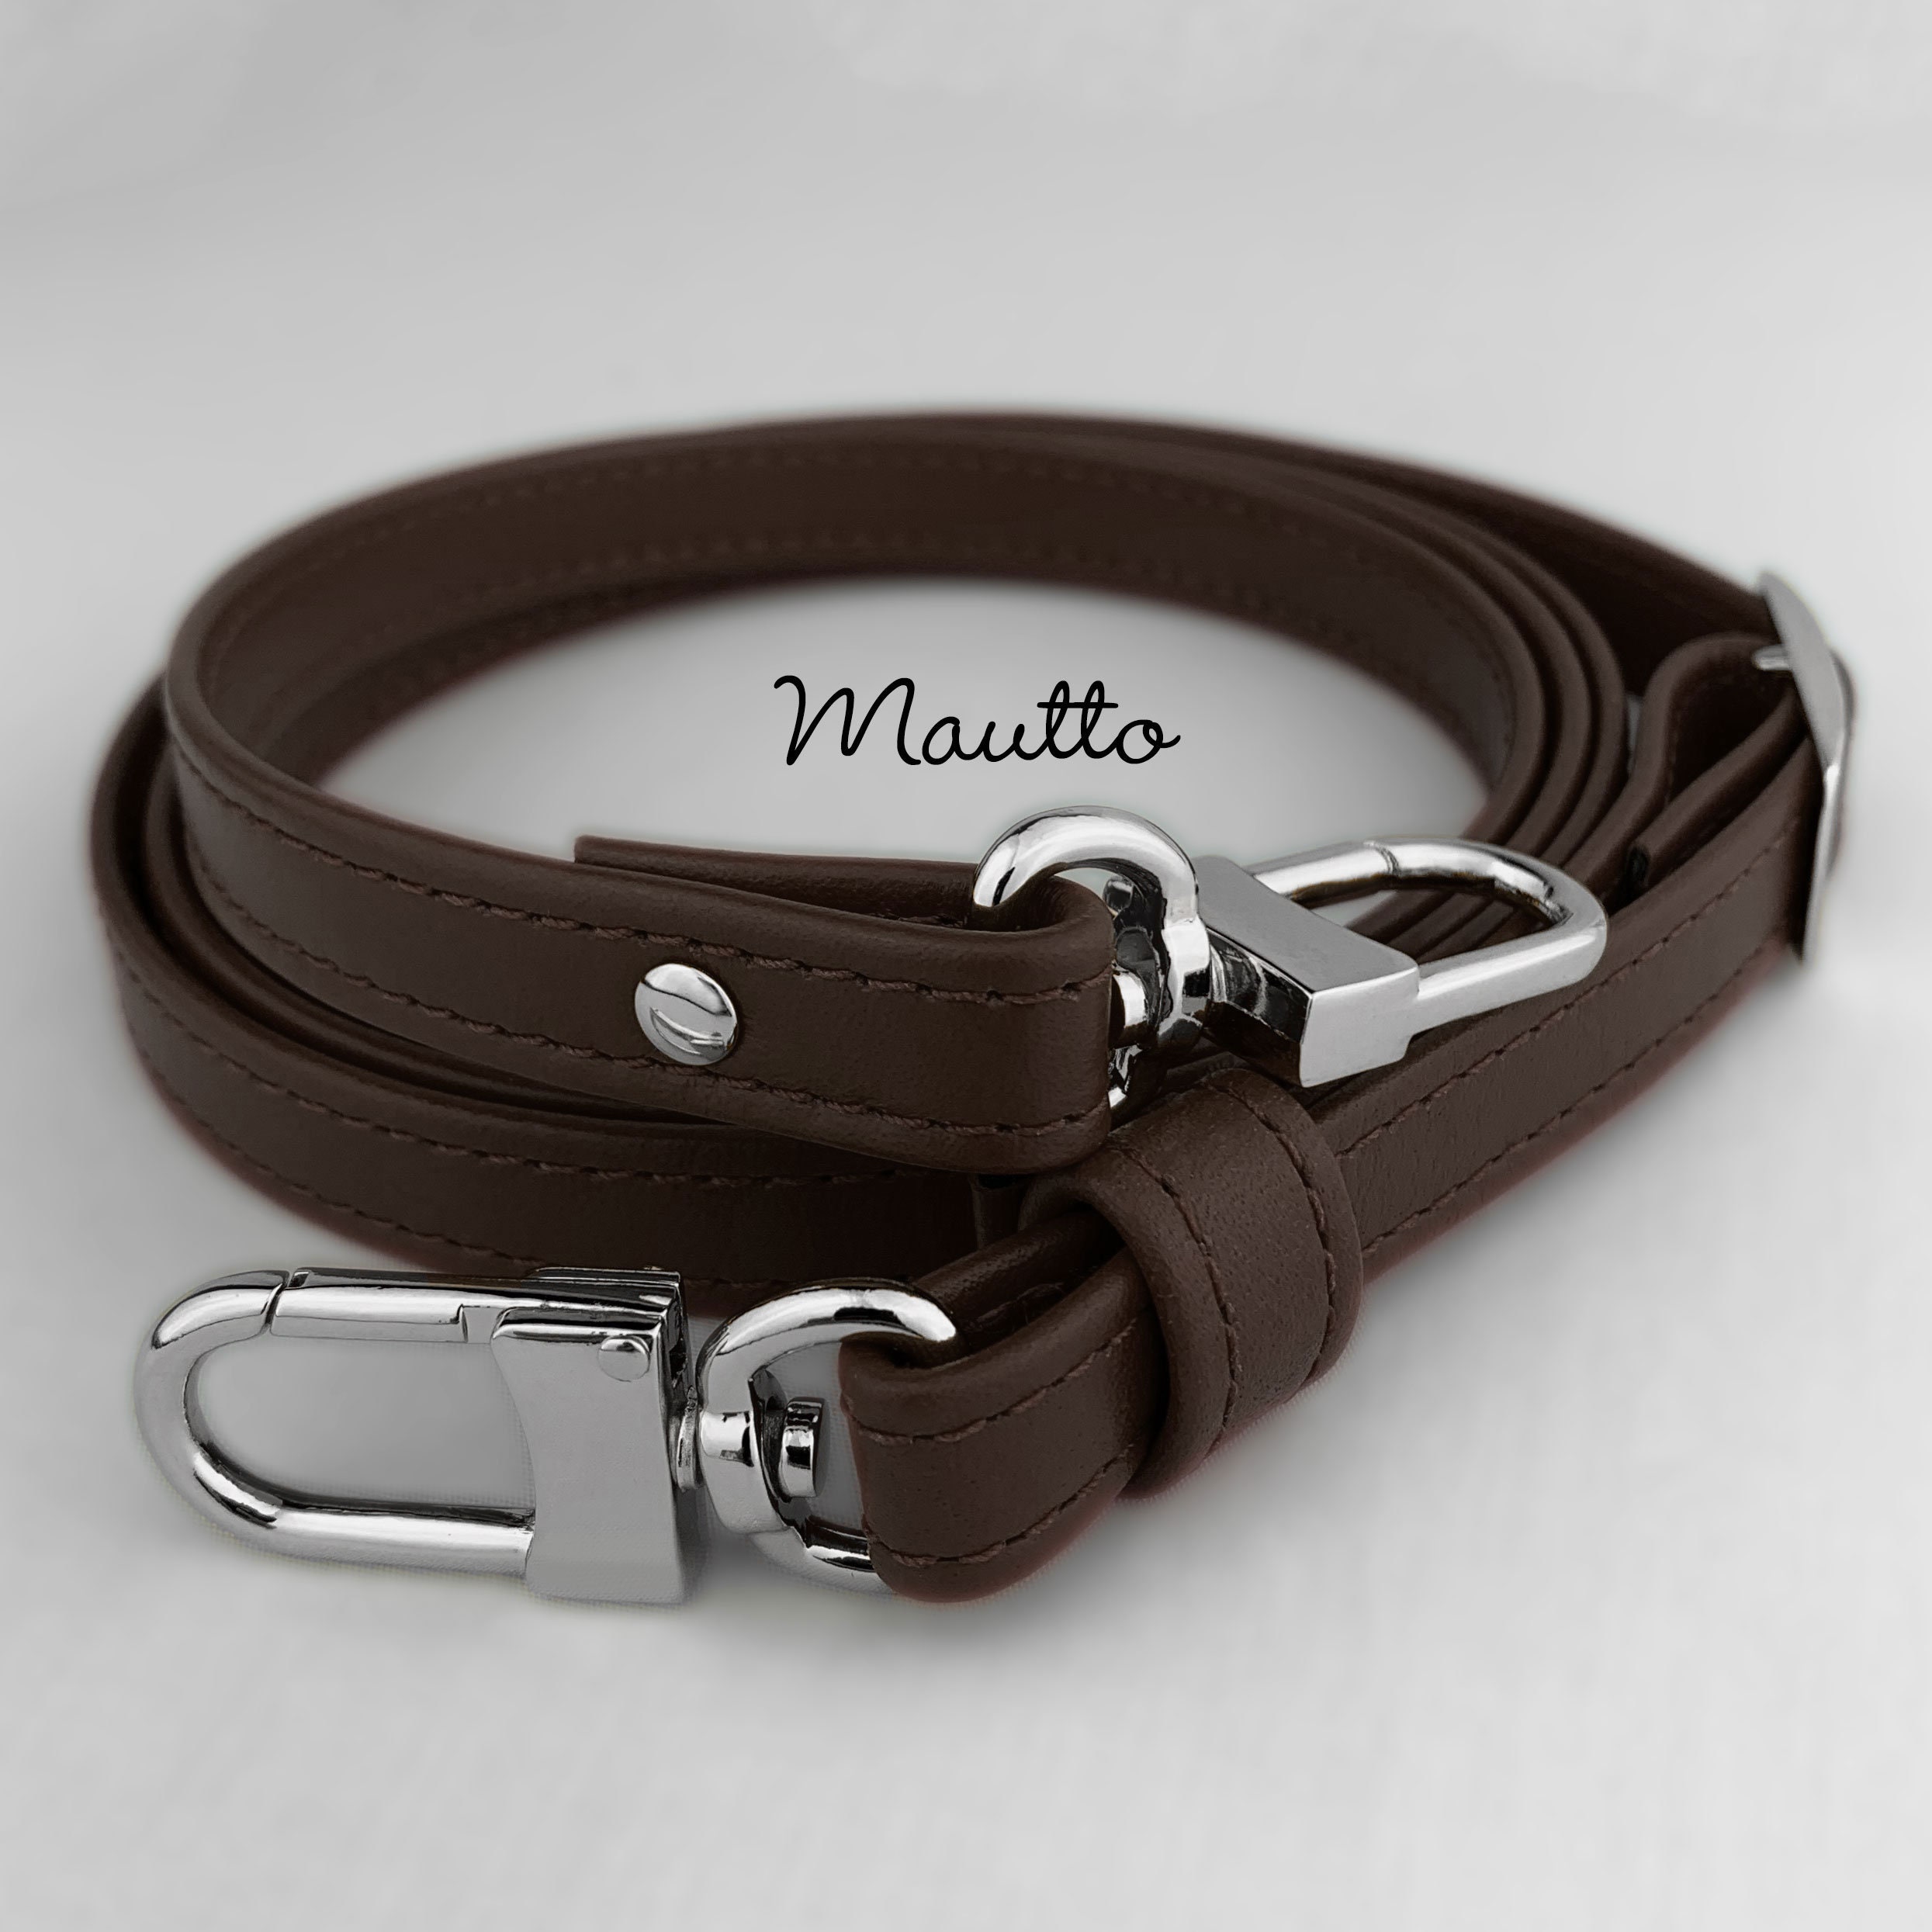 Hello Kitty dog collar Handmade adjustable buckle 1" or 5/8" wide  or leash